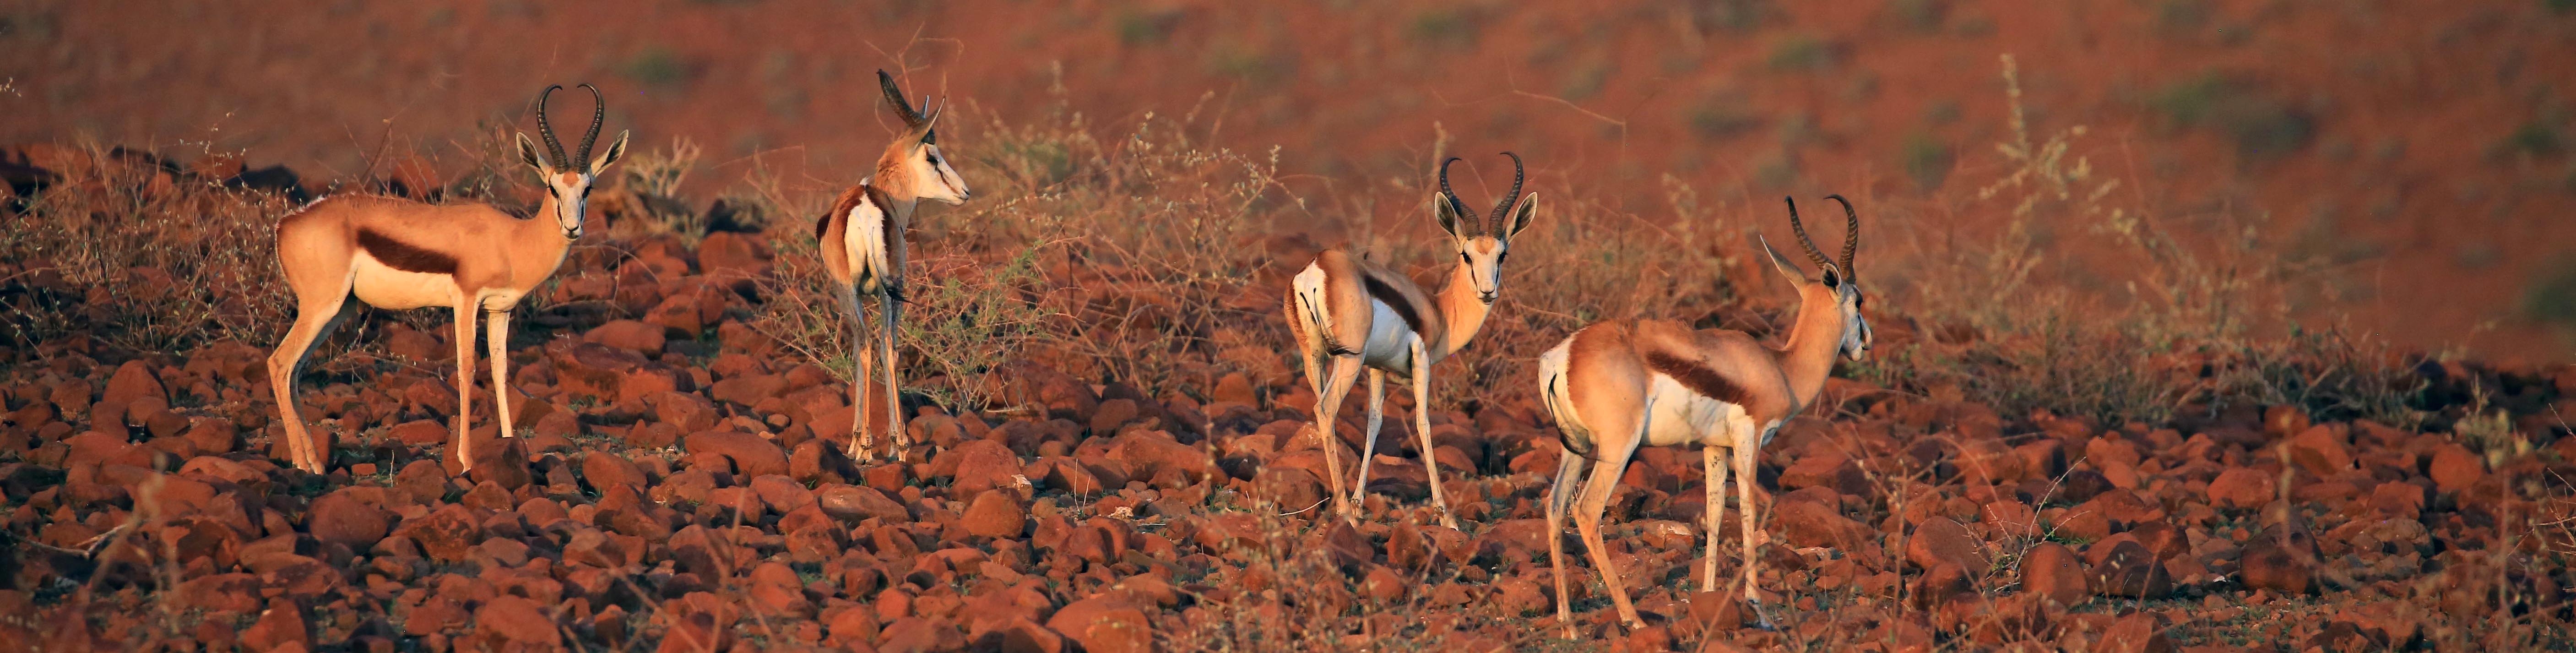 Springbok, Damaraland Namibia | Your Safari